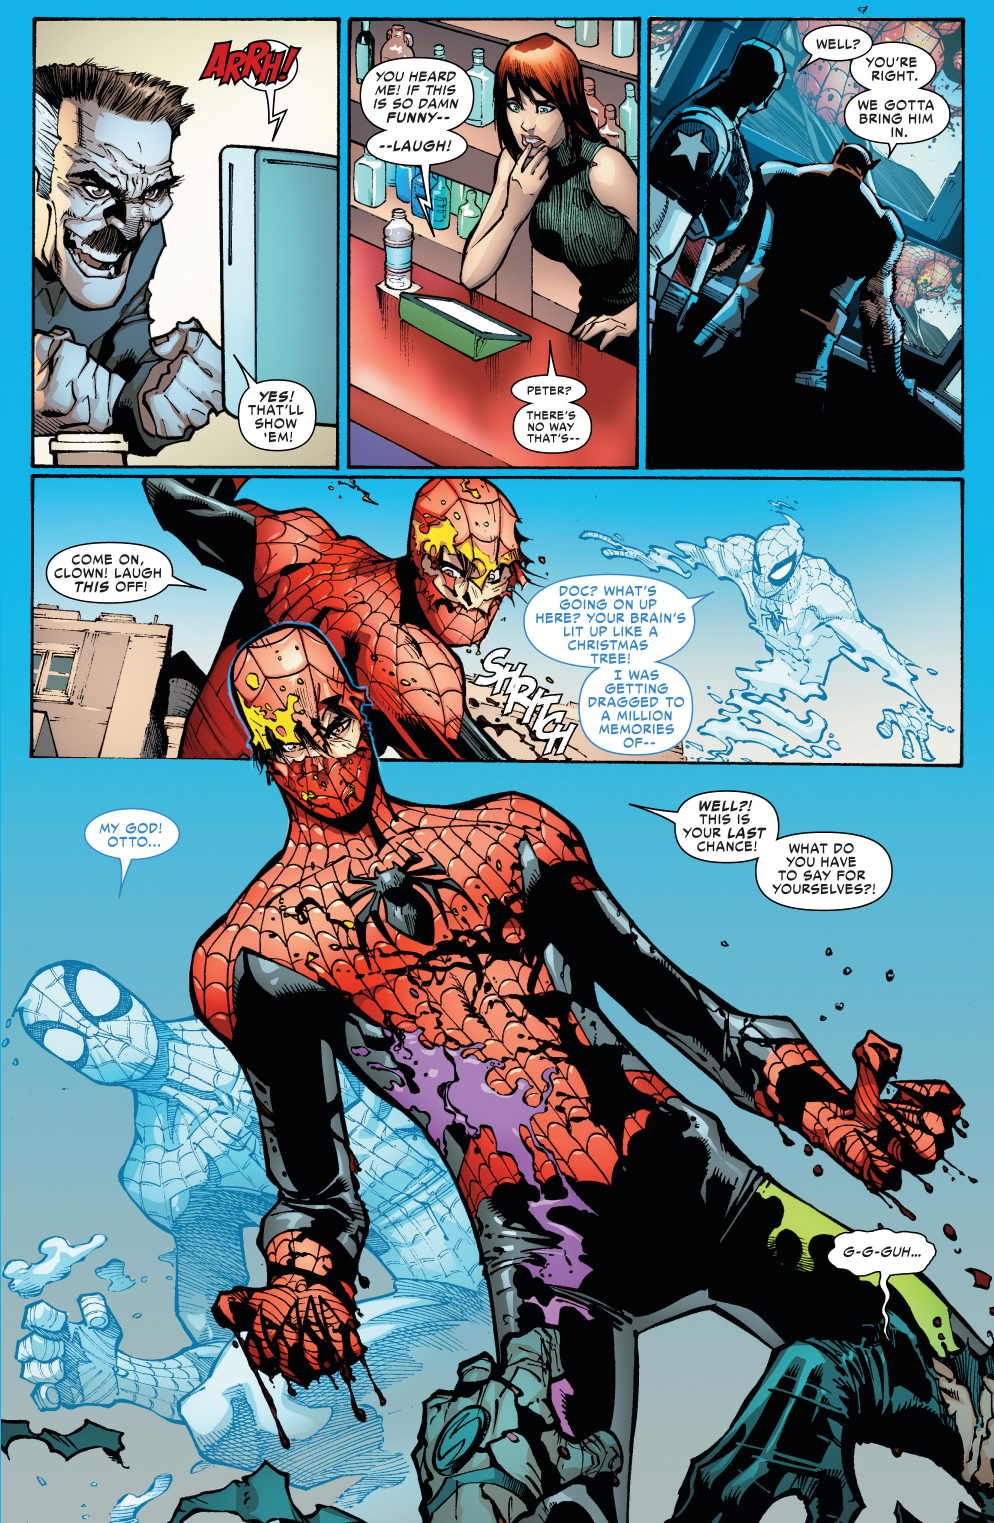 superior spider-man vs jester and screwball